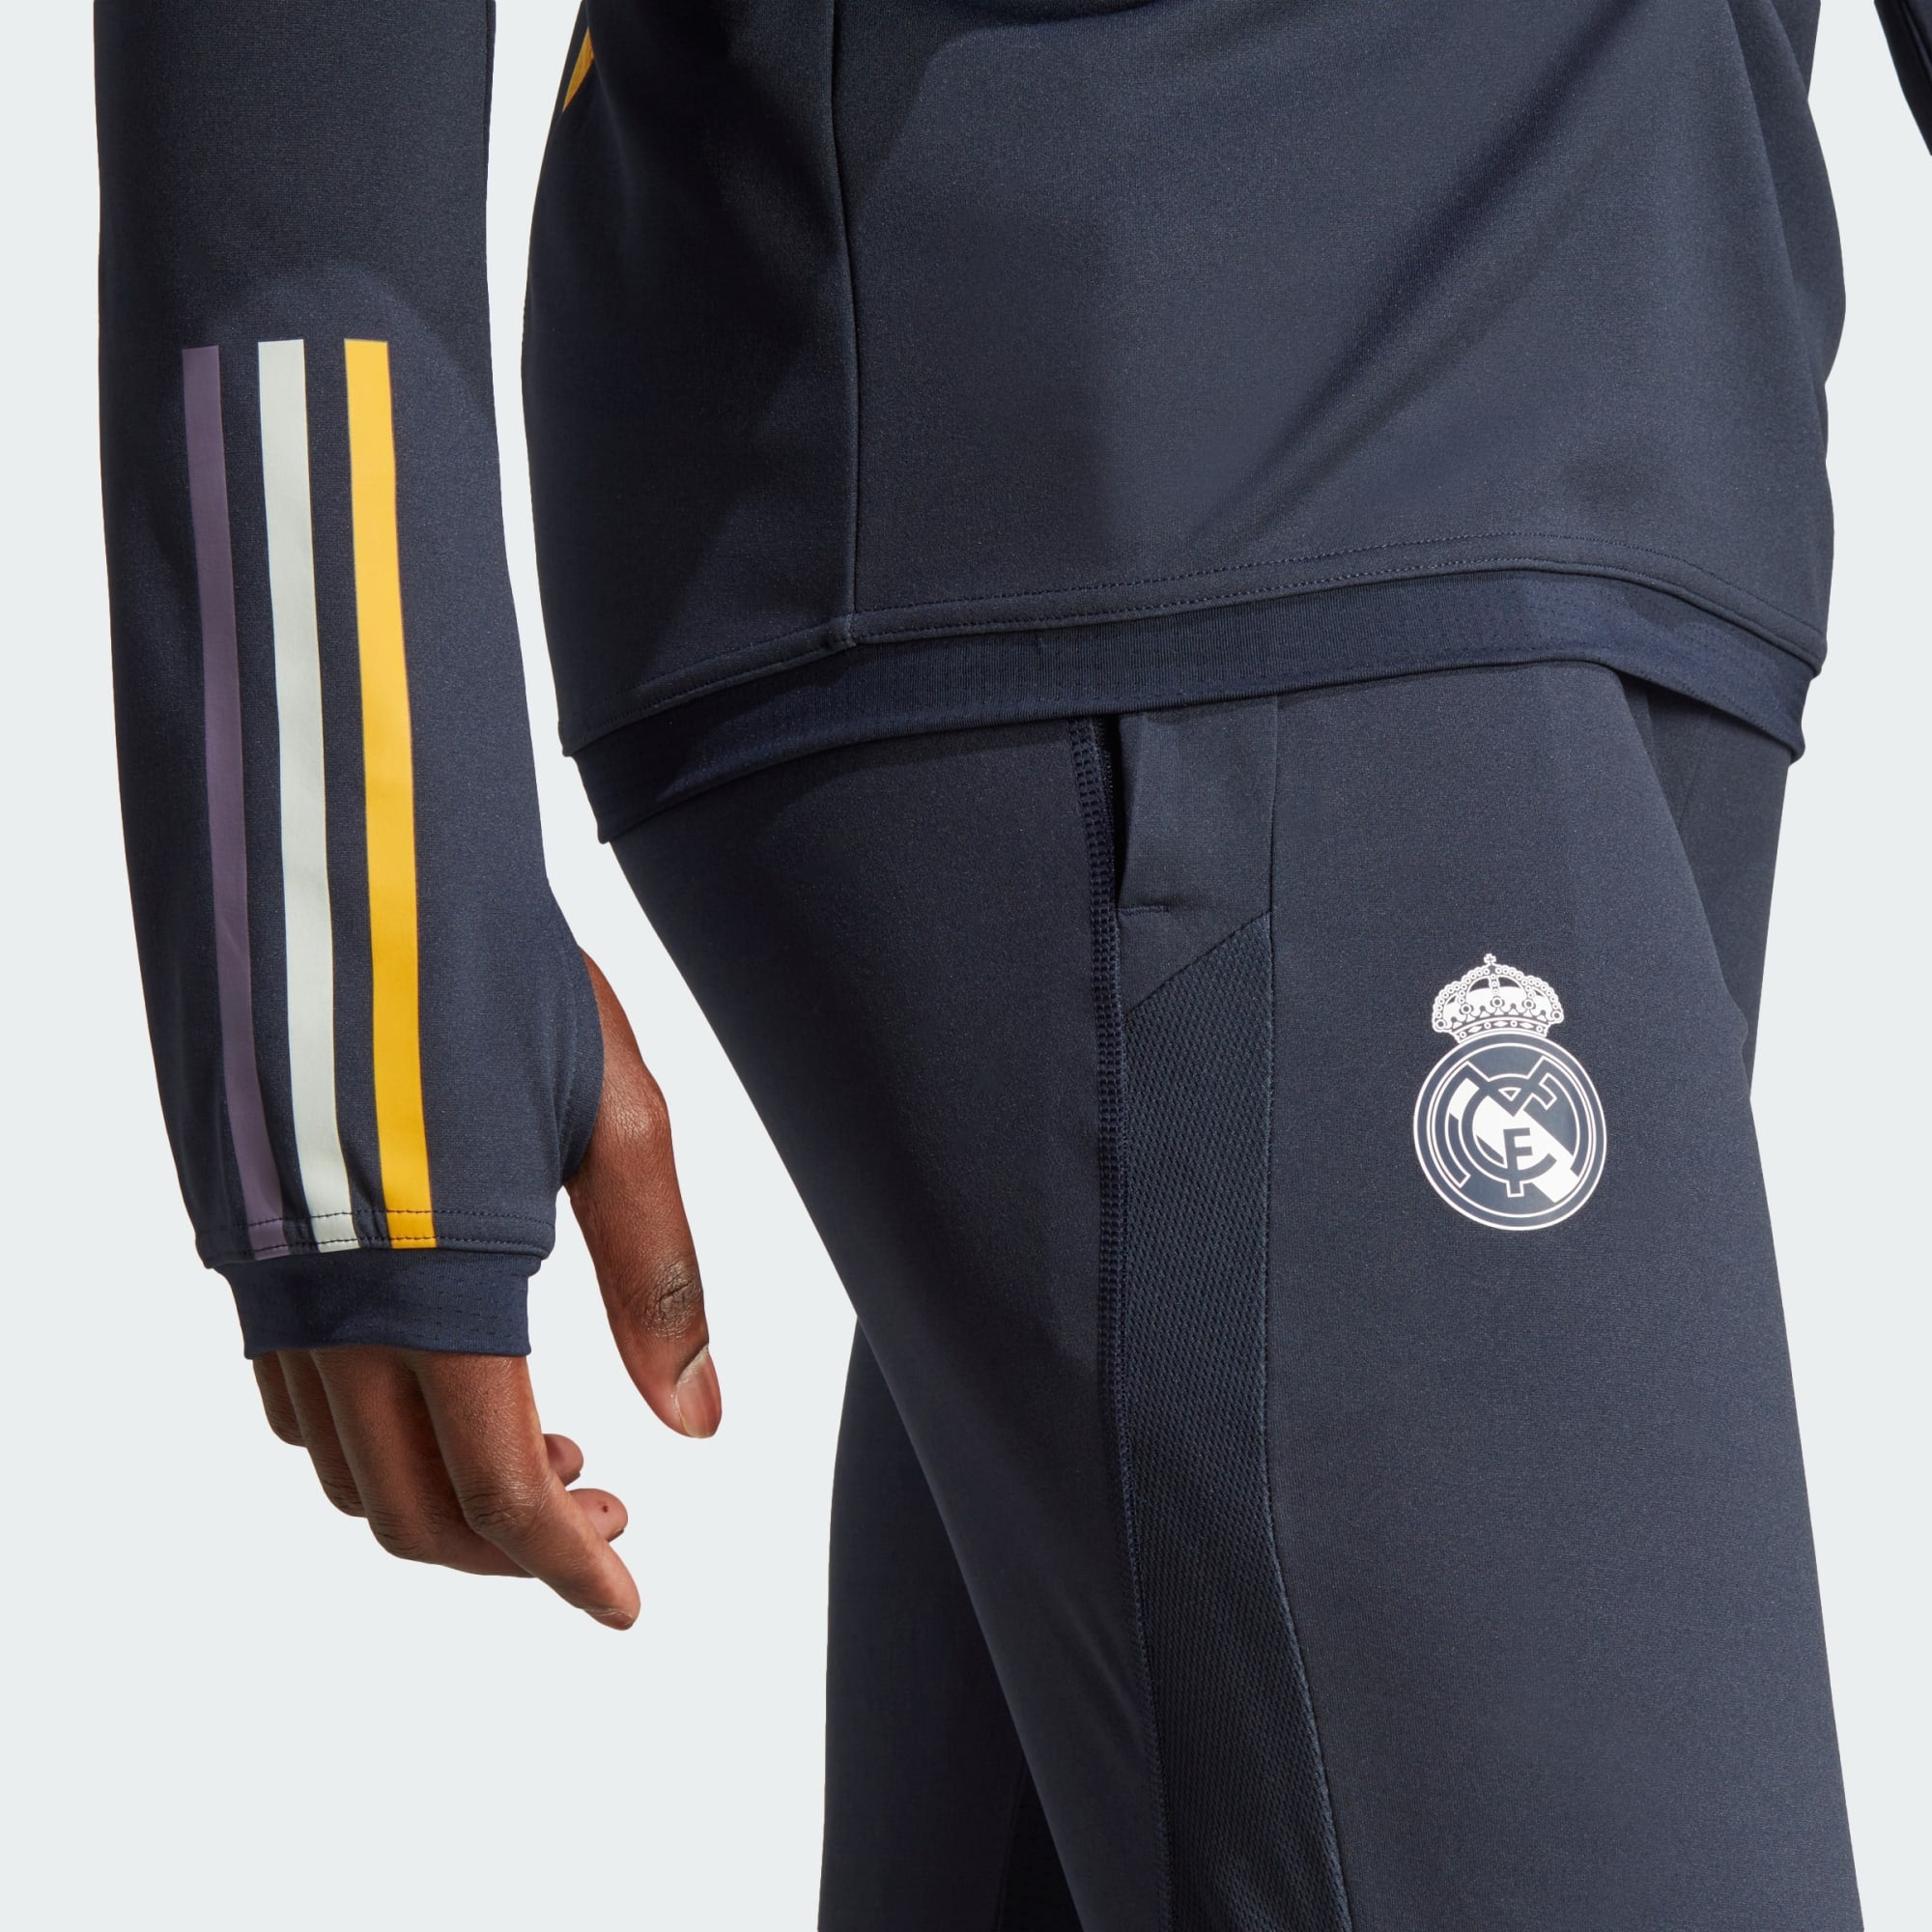 ADIDAS Real Madrid TRG Trousers (Grey/Volt) : Amazon.de: Fashion